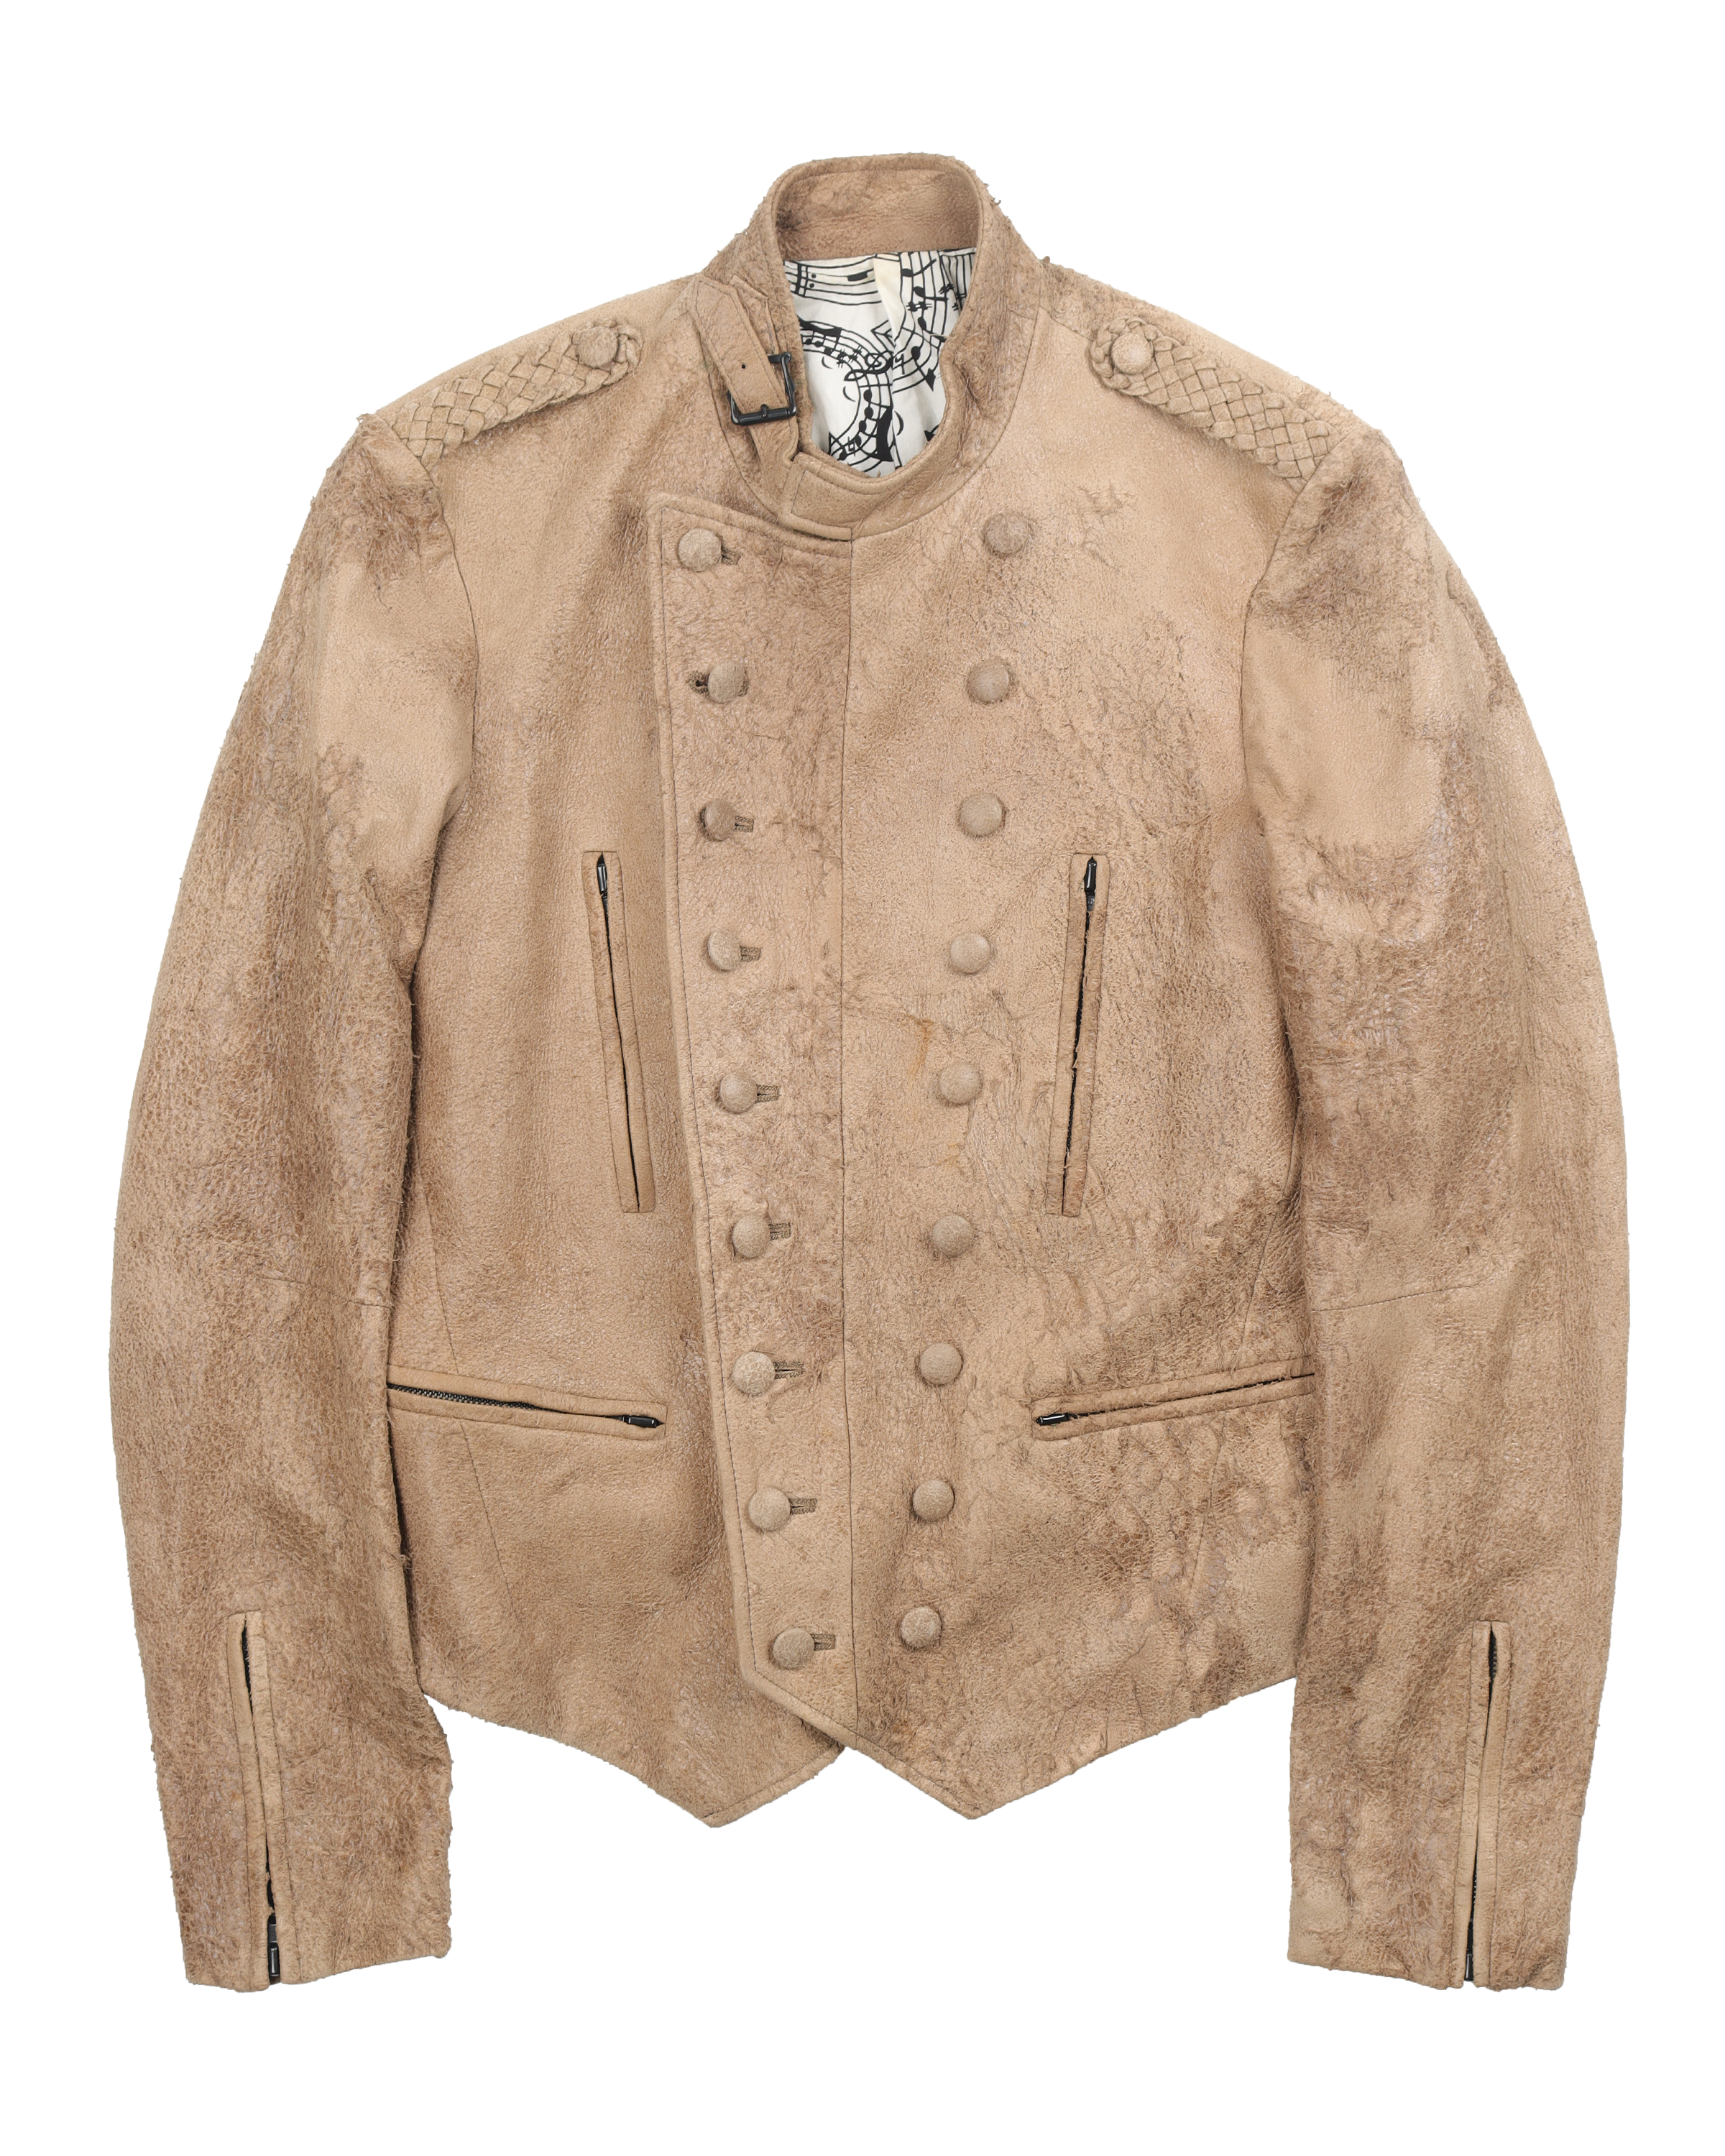 Sheepskin Napoleon Leather Jacket (2007) "About A Boy"